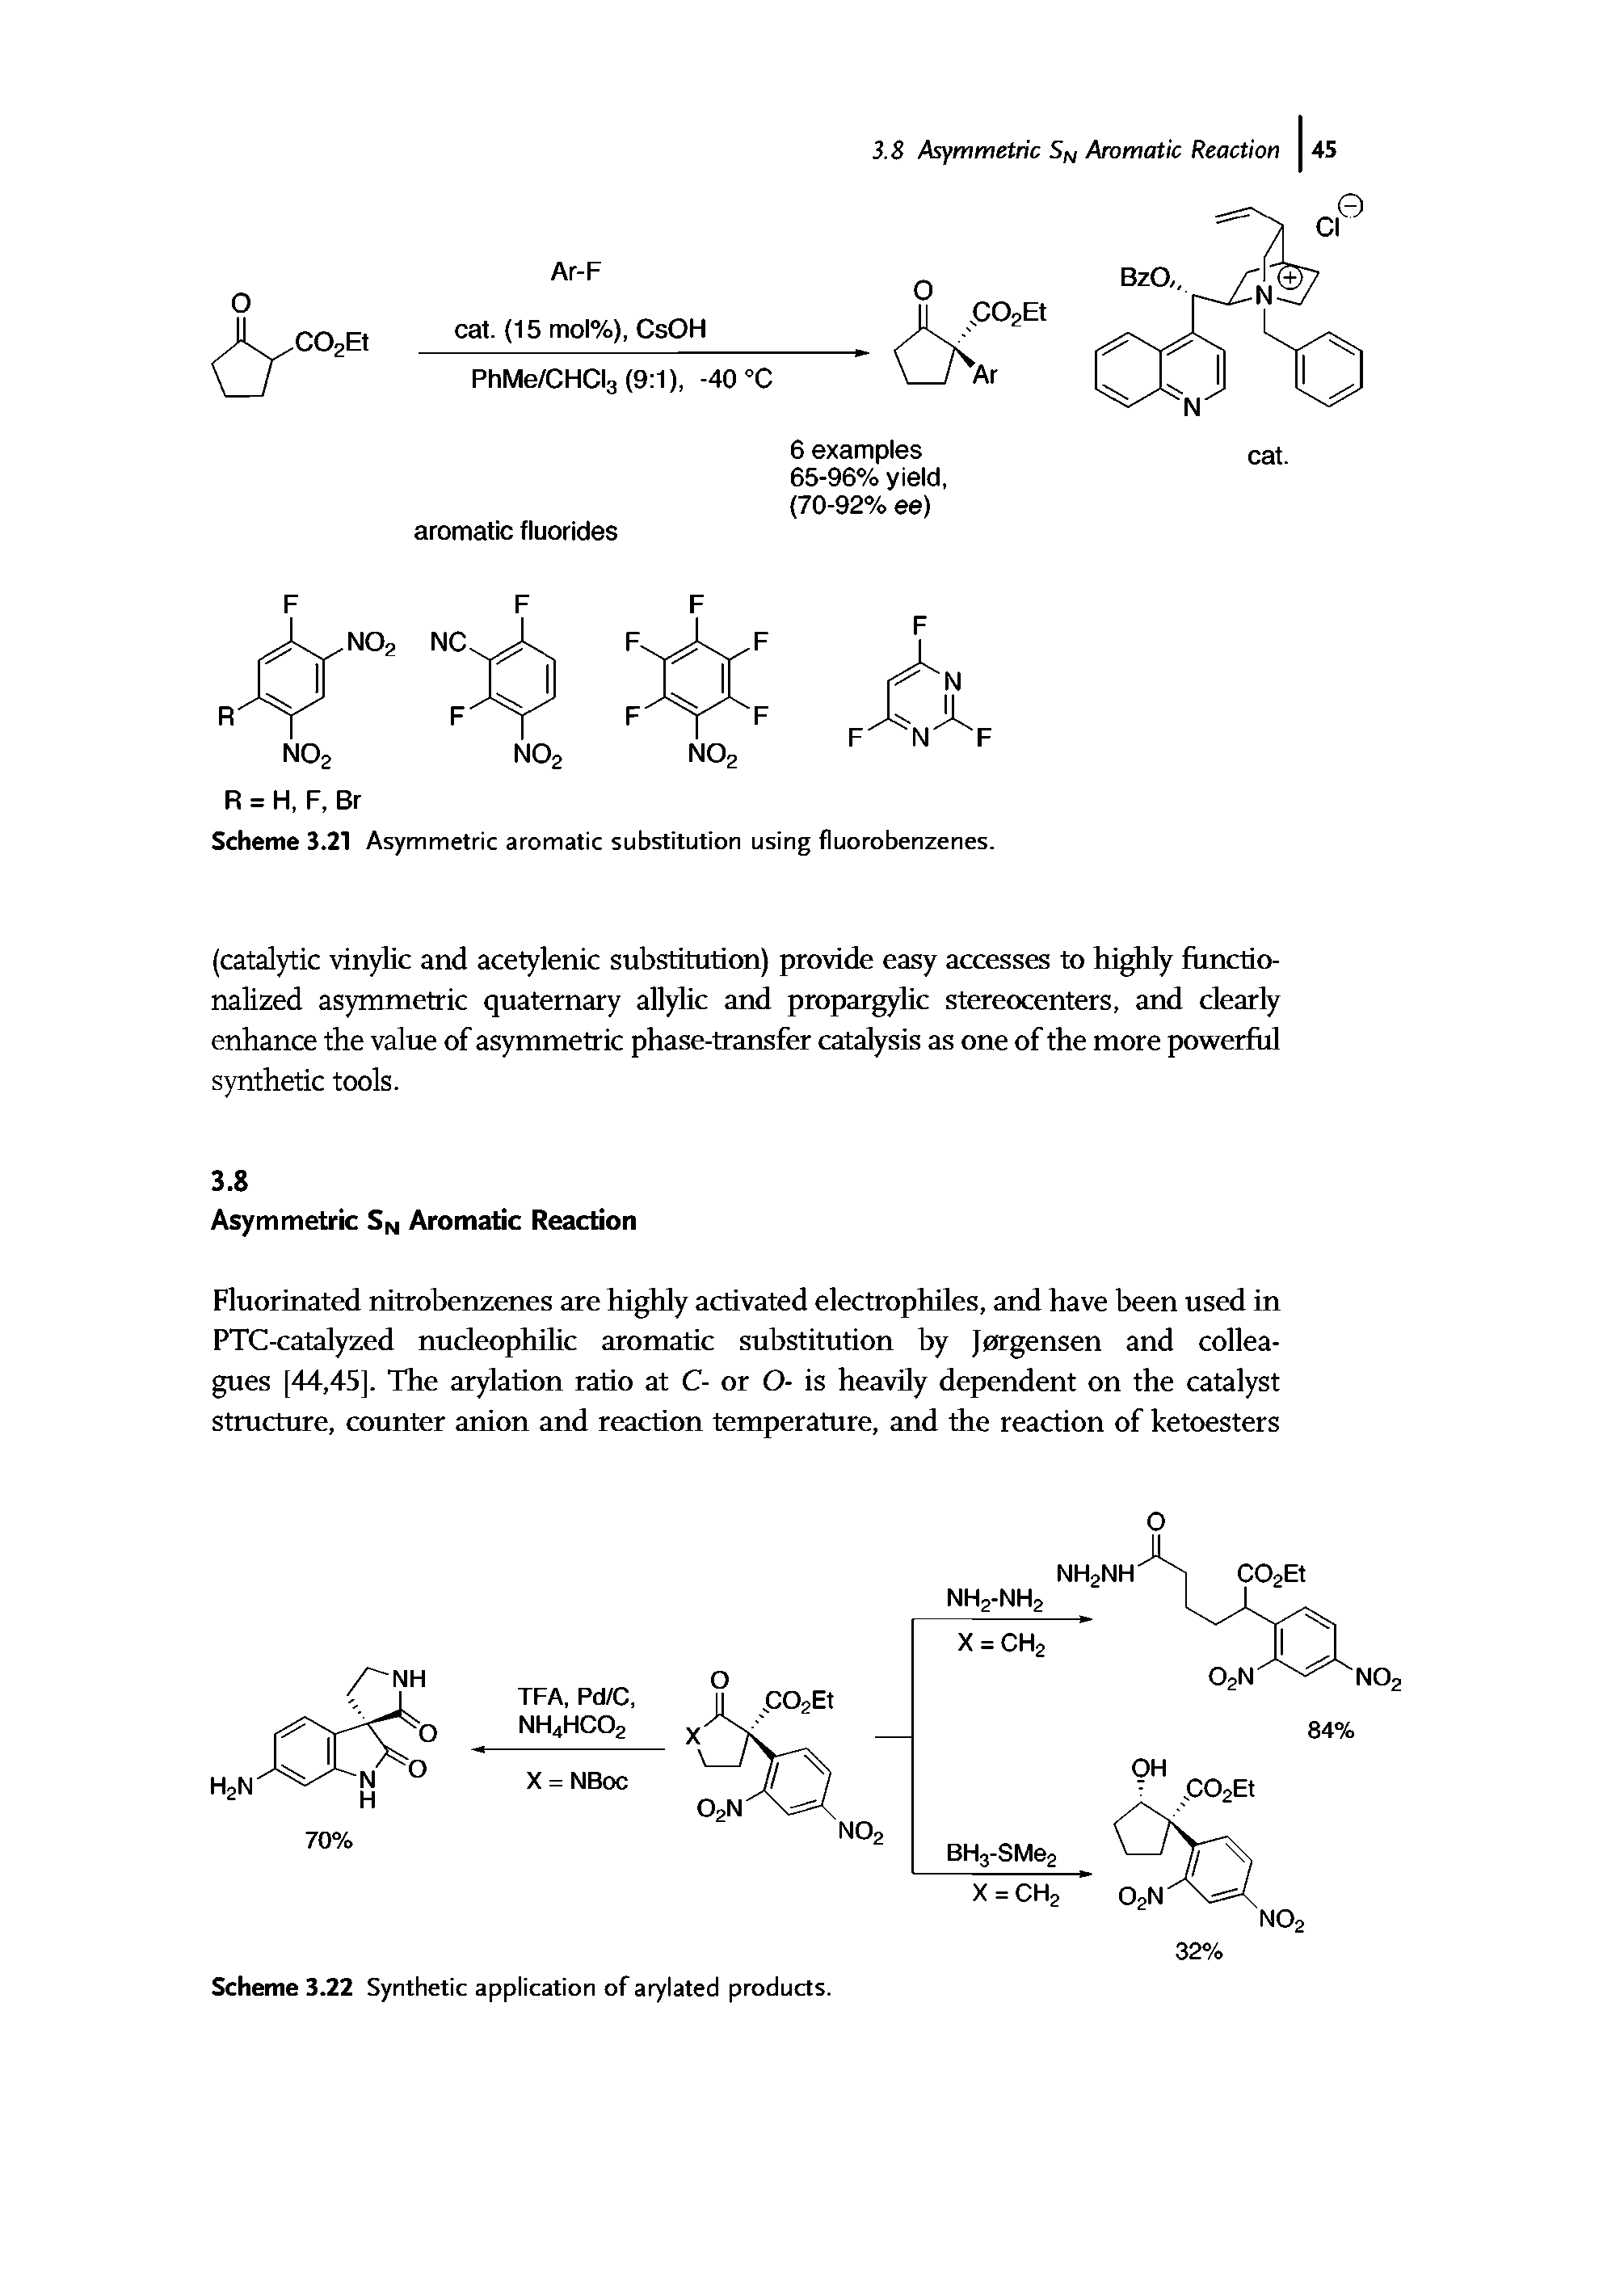 Scheme 3.21 Asymmetric aromatic substitution using fluorobenzenes.